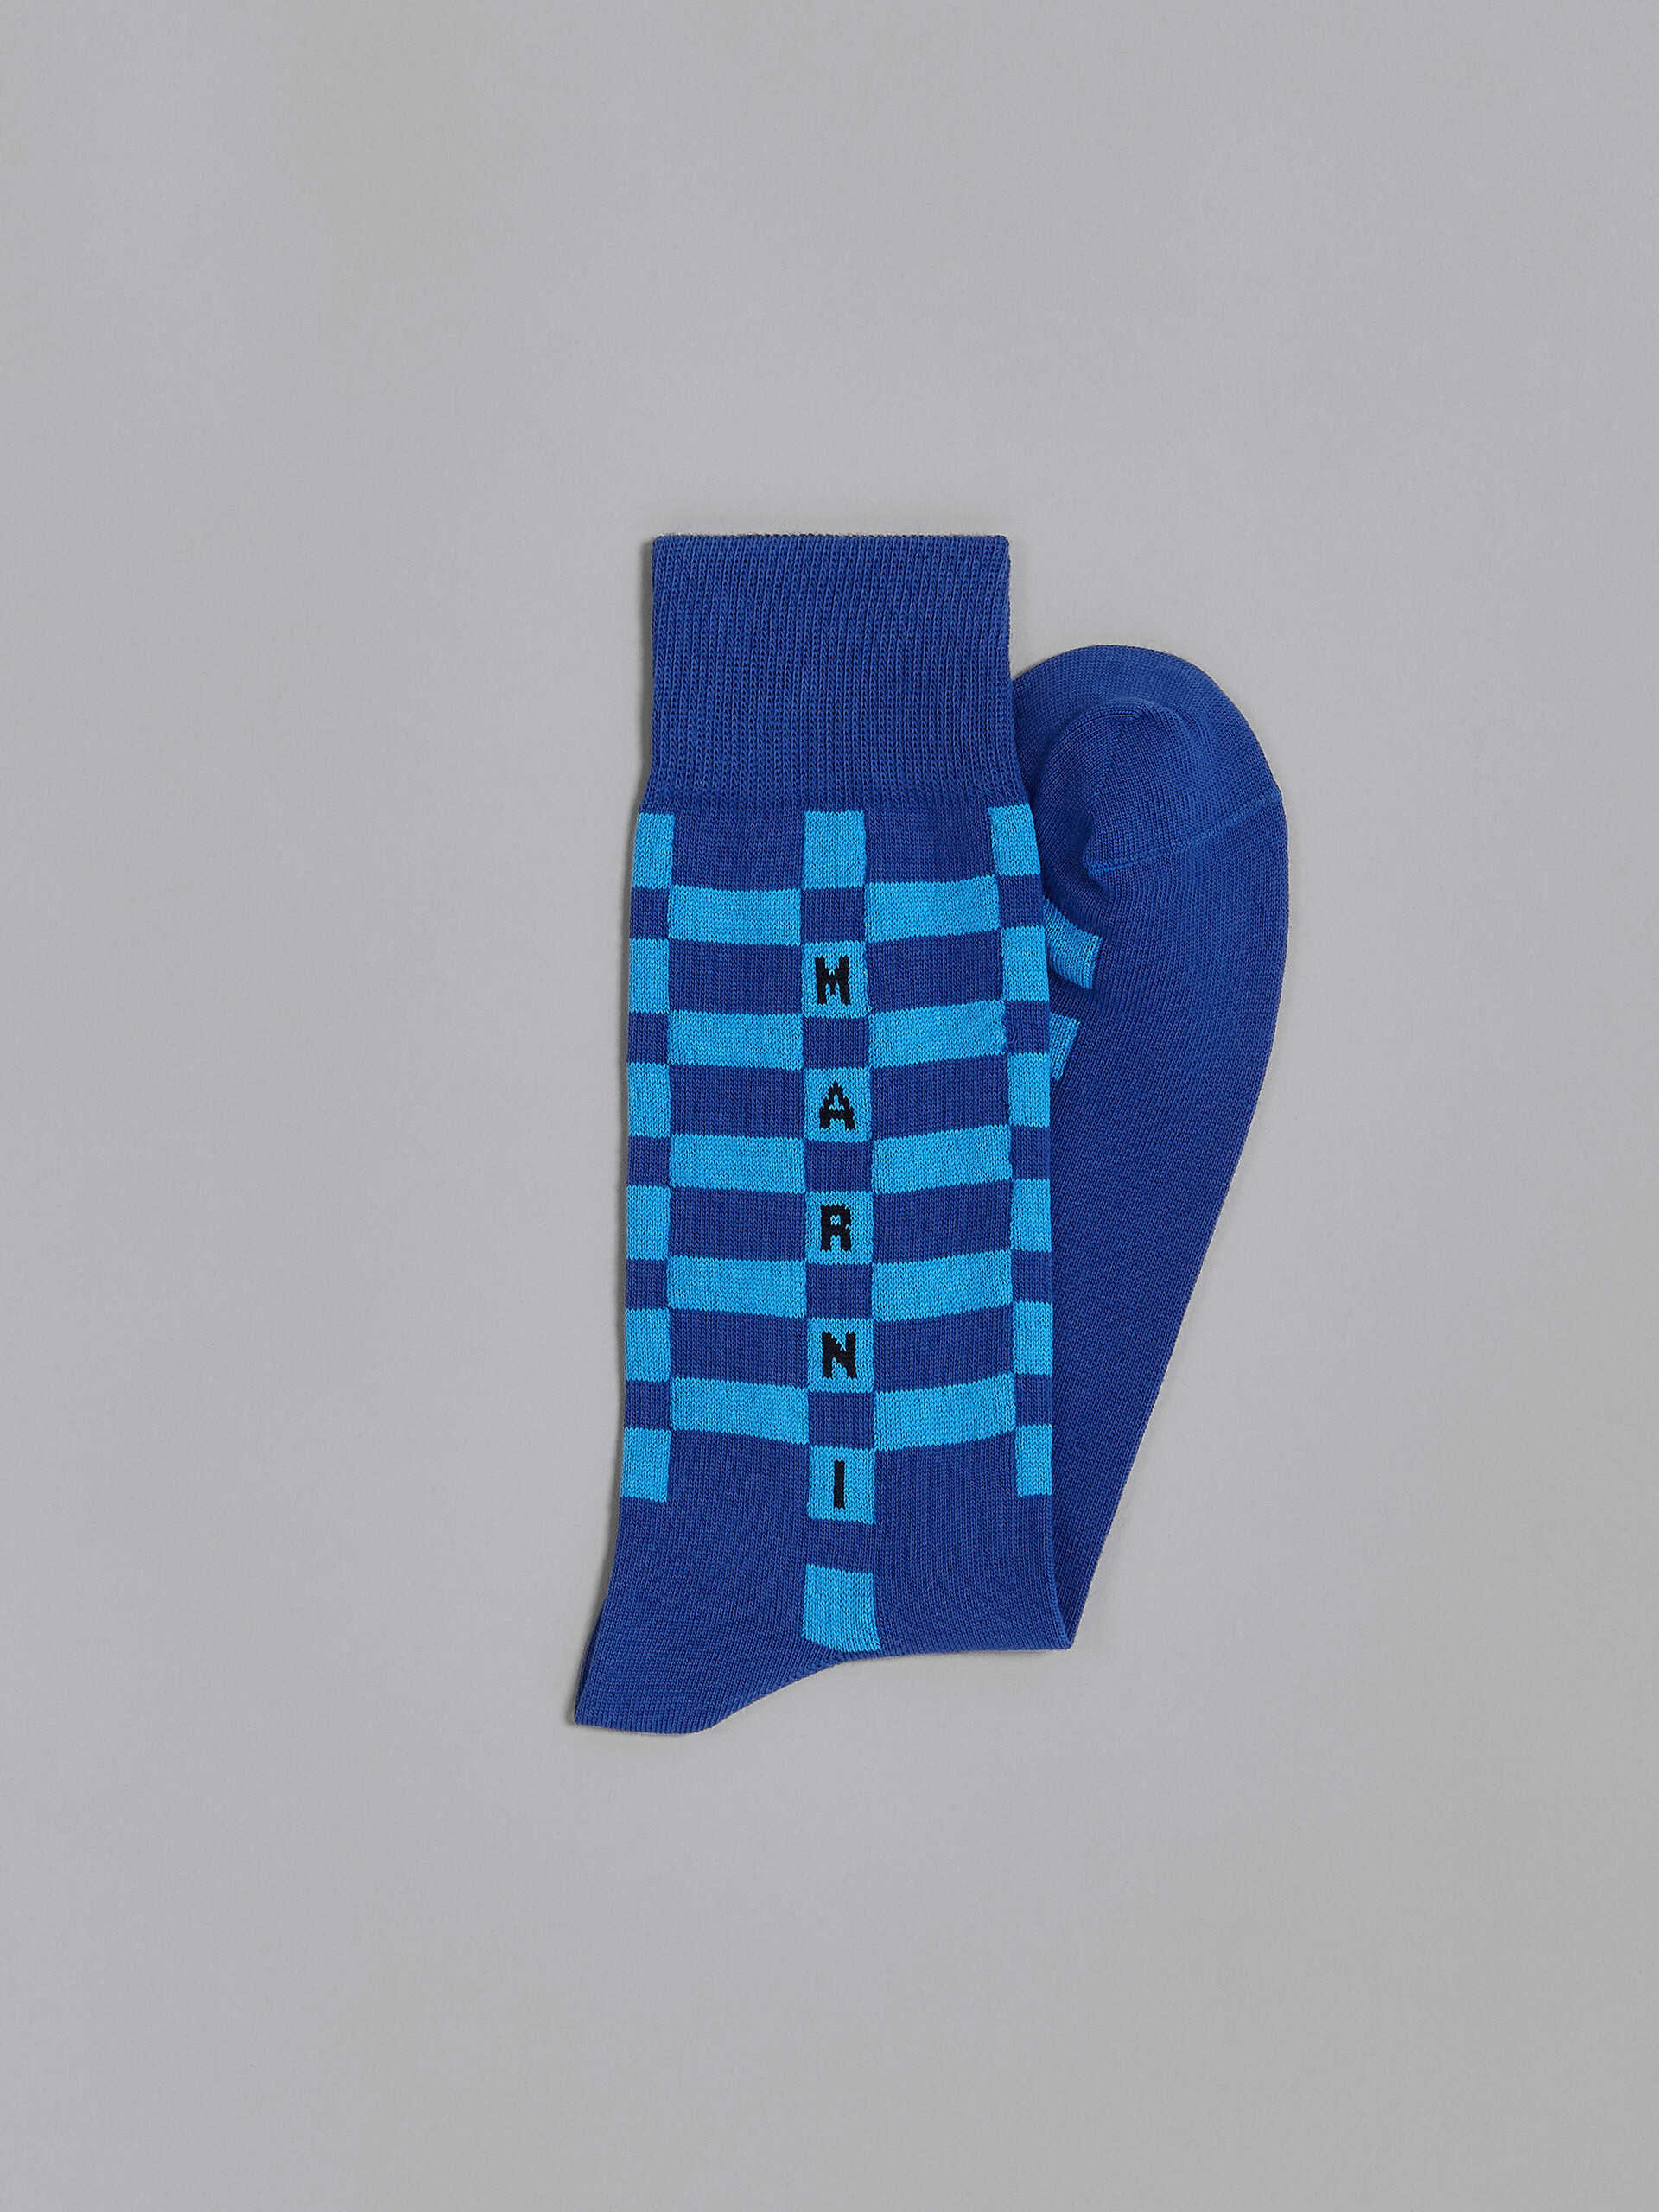 Blue cotton and nylon socks - Socks - Image 2